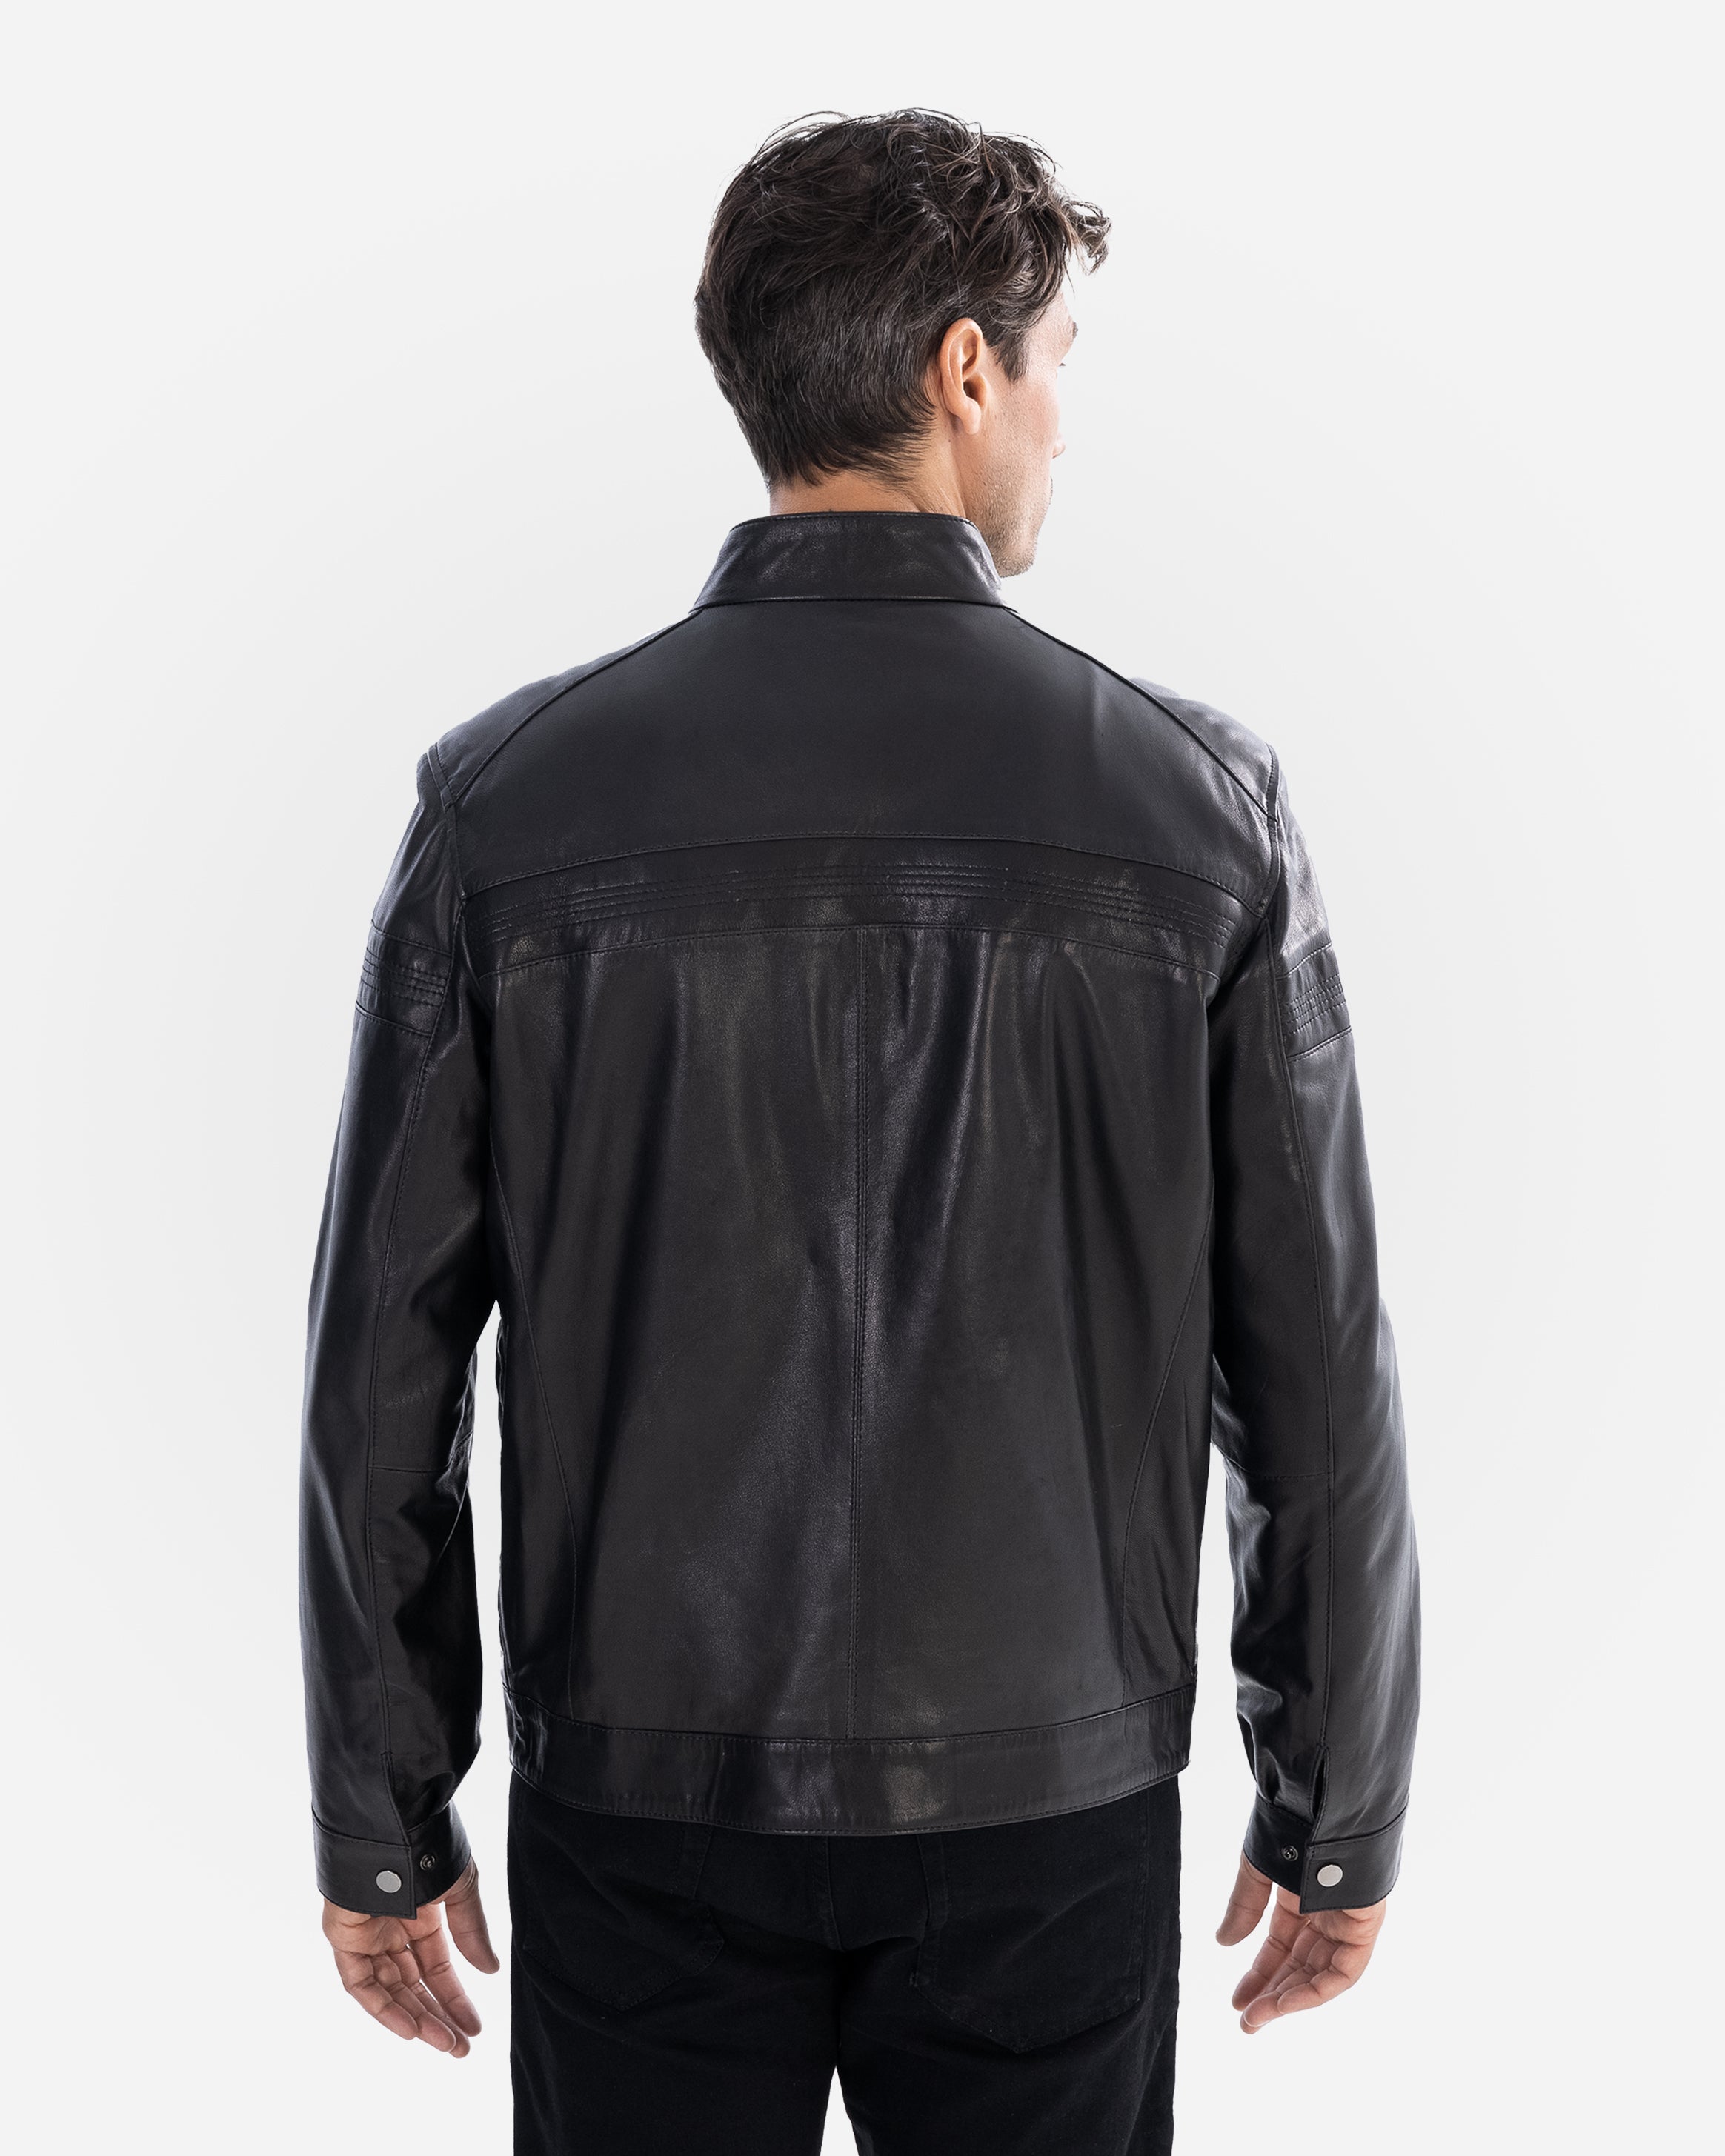 Verri Leather Jacket